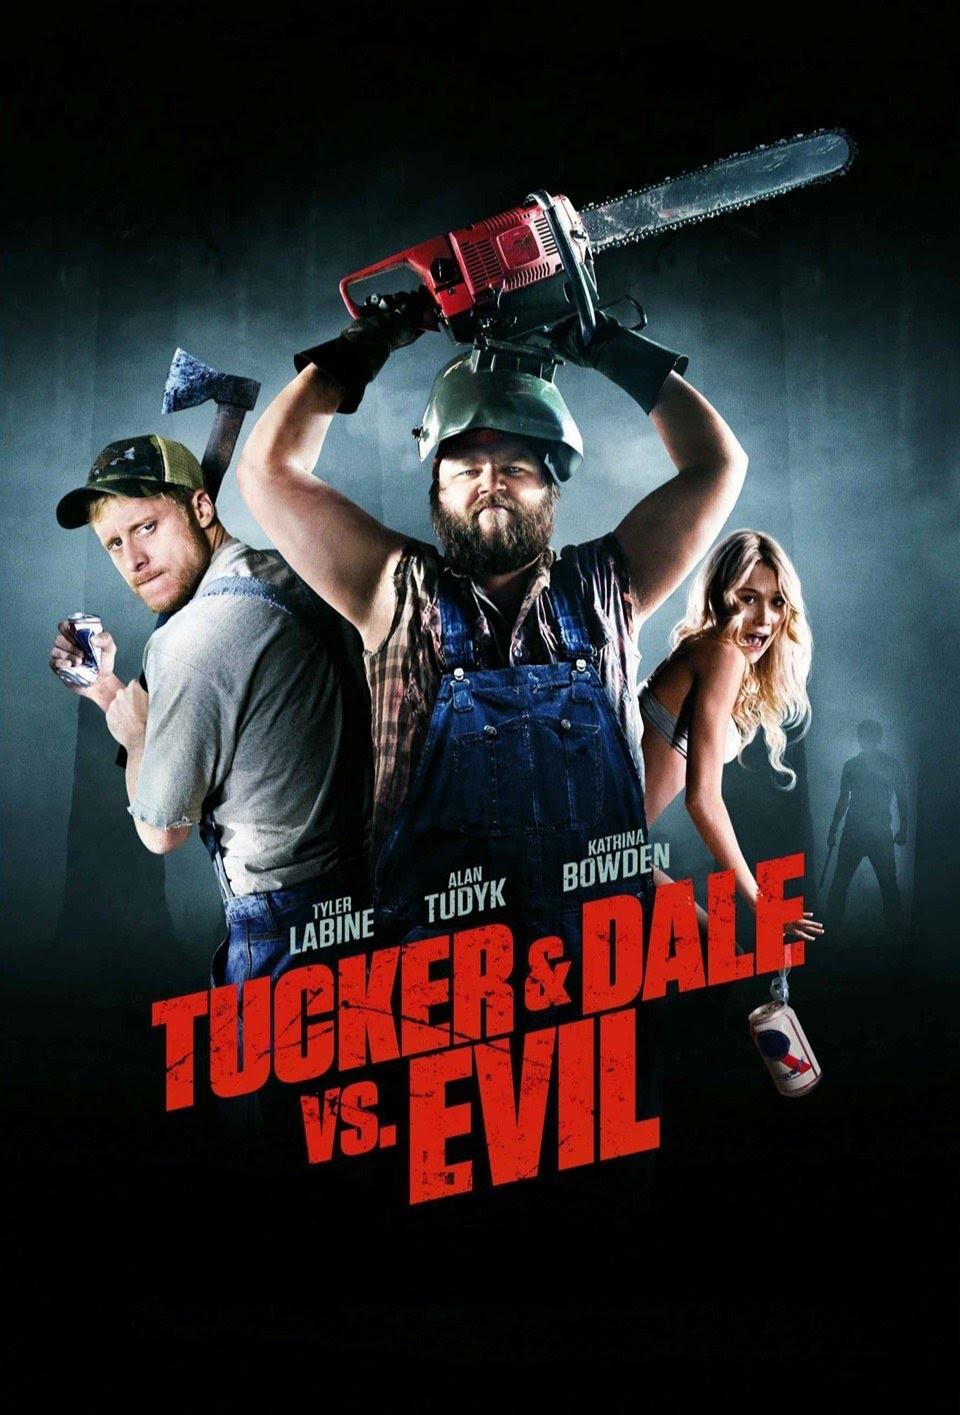 tucker und dale vs evil - Kathina Alan Bowden Tyler Tudyk Labine Tucher & Dale Vs. Evil